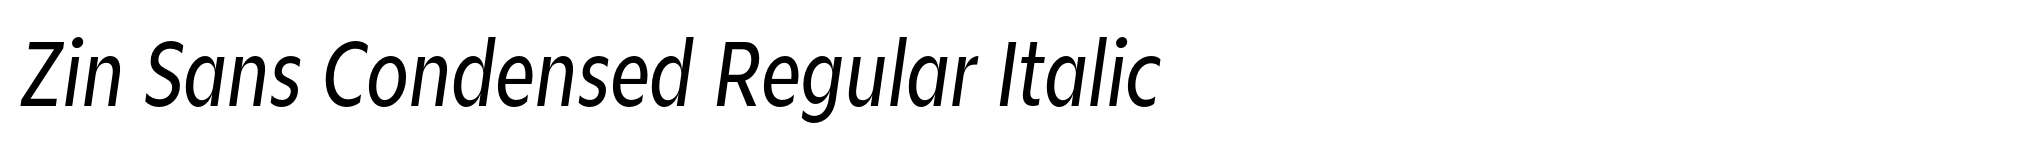 Zin Sans Condensed Regular Italic image